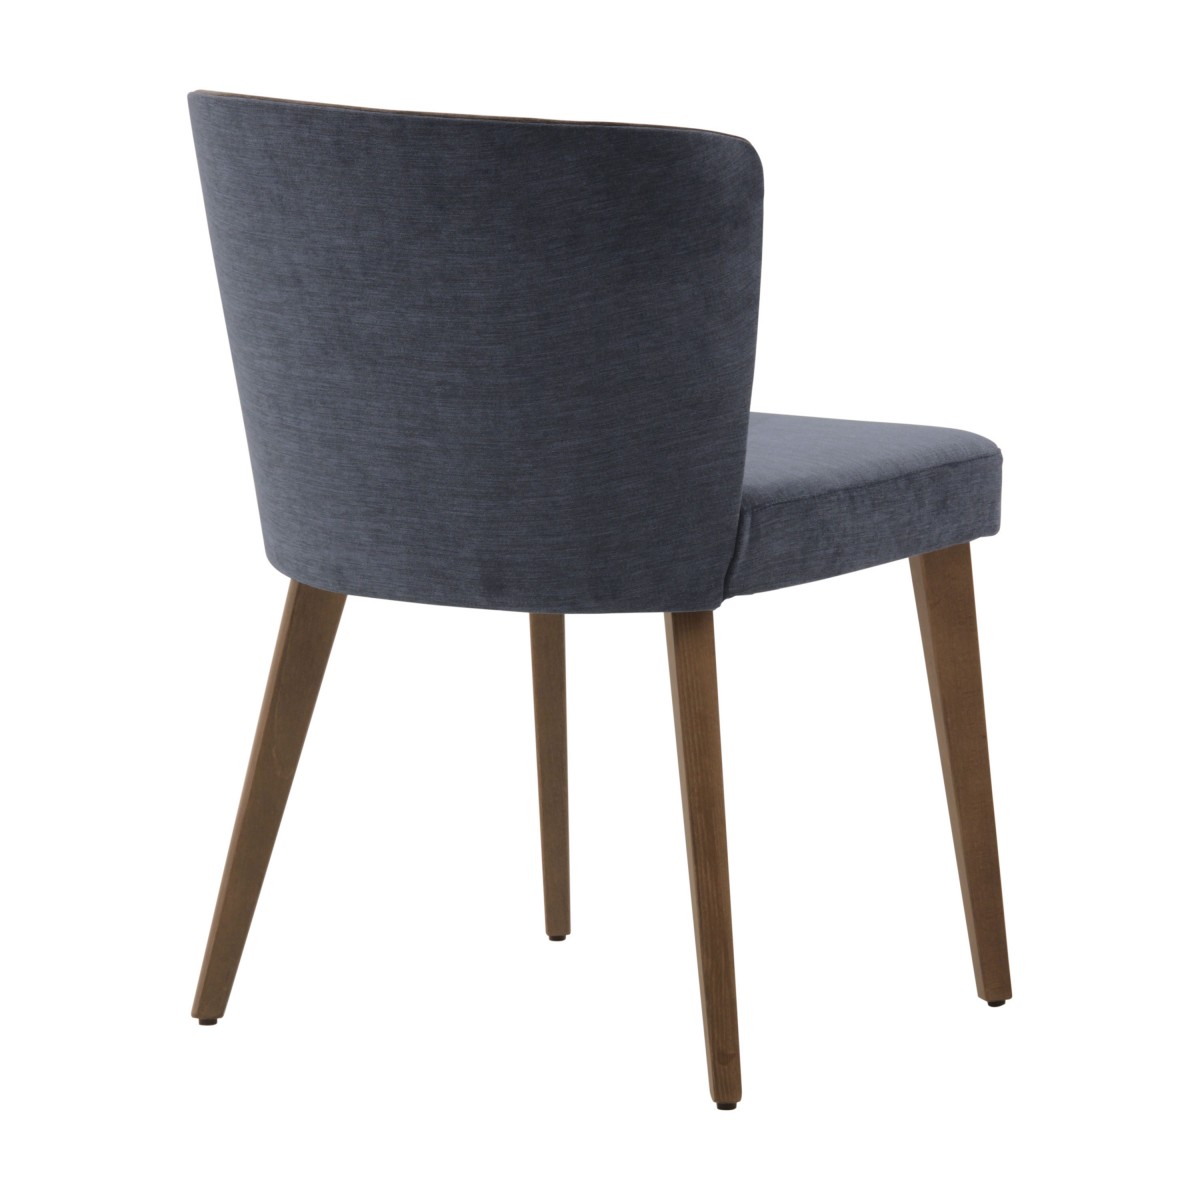 italian modern chair eva 3 6257